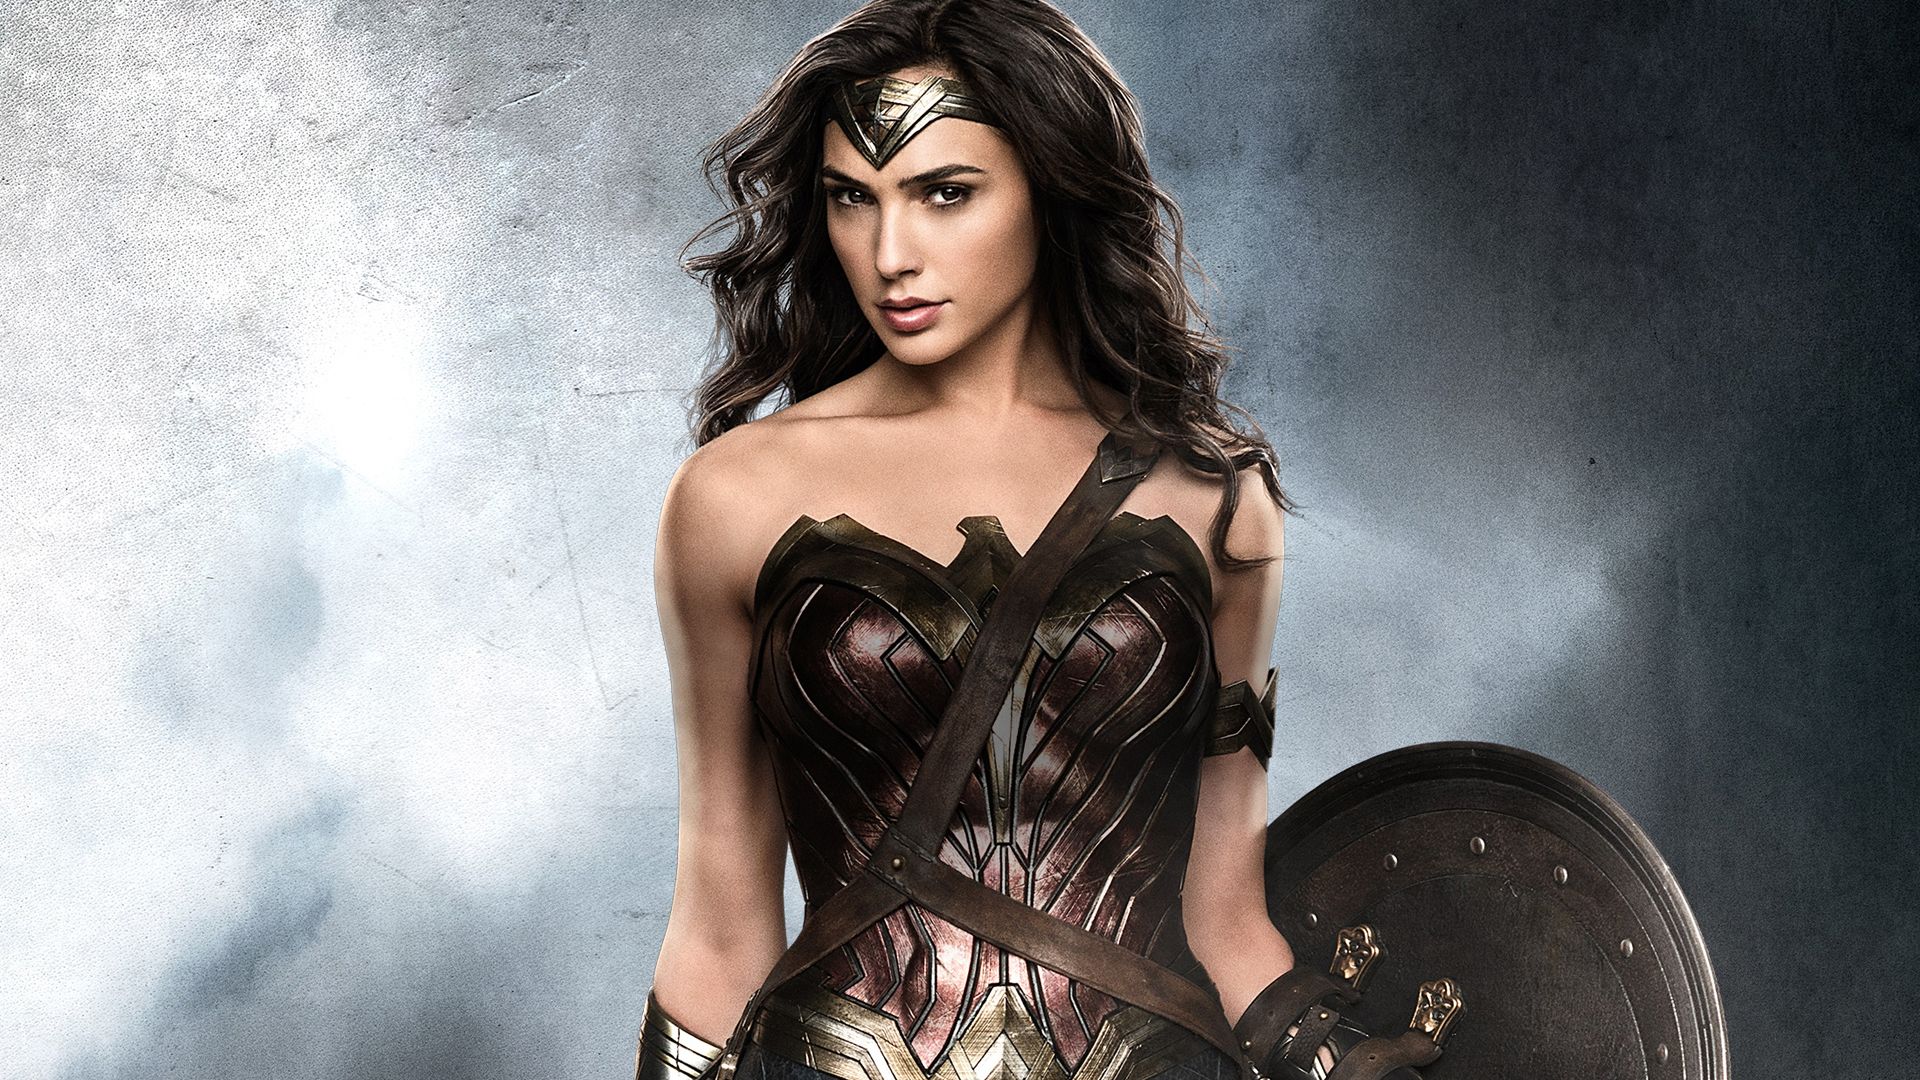 Wonder Woman Wallpaper Full HD Free Download For Desktop PC